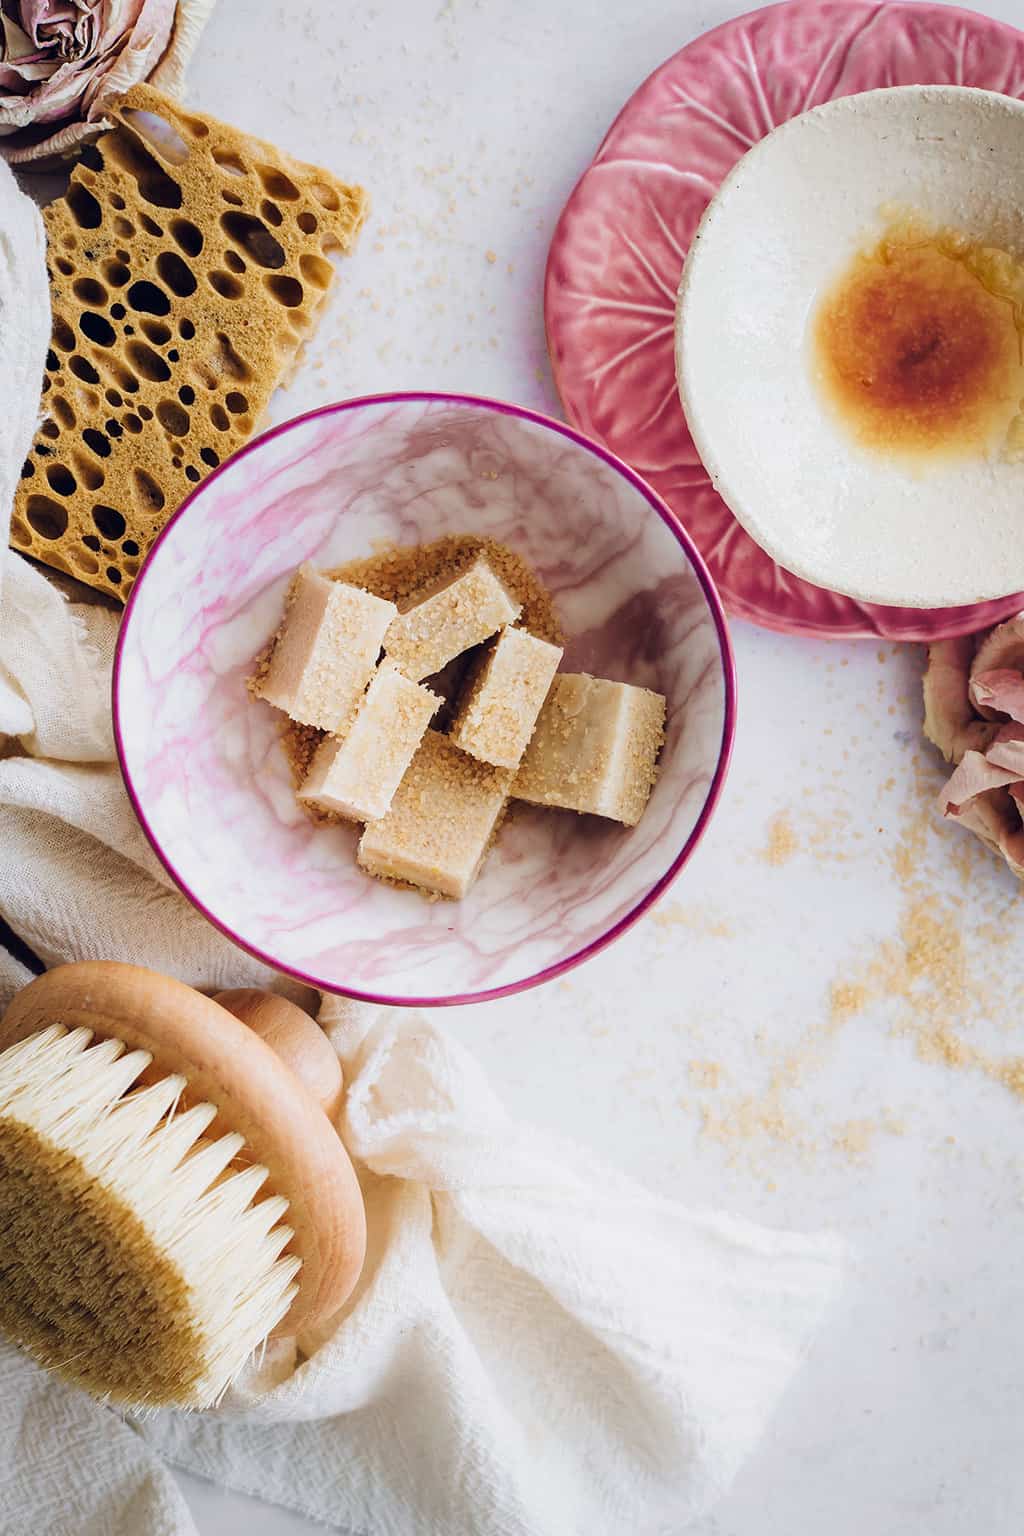 15 Kitchen Beauty Ingredients - Brown Sugar | HelloGlow.co